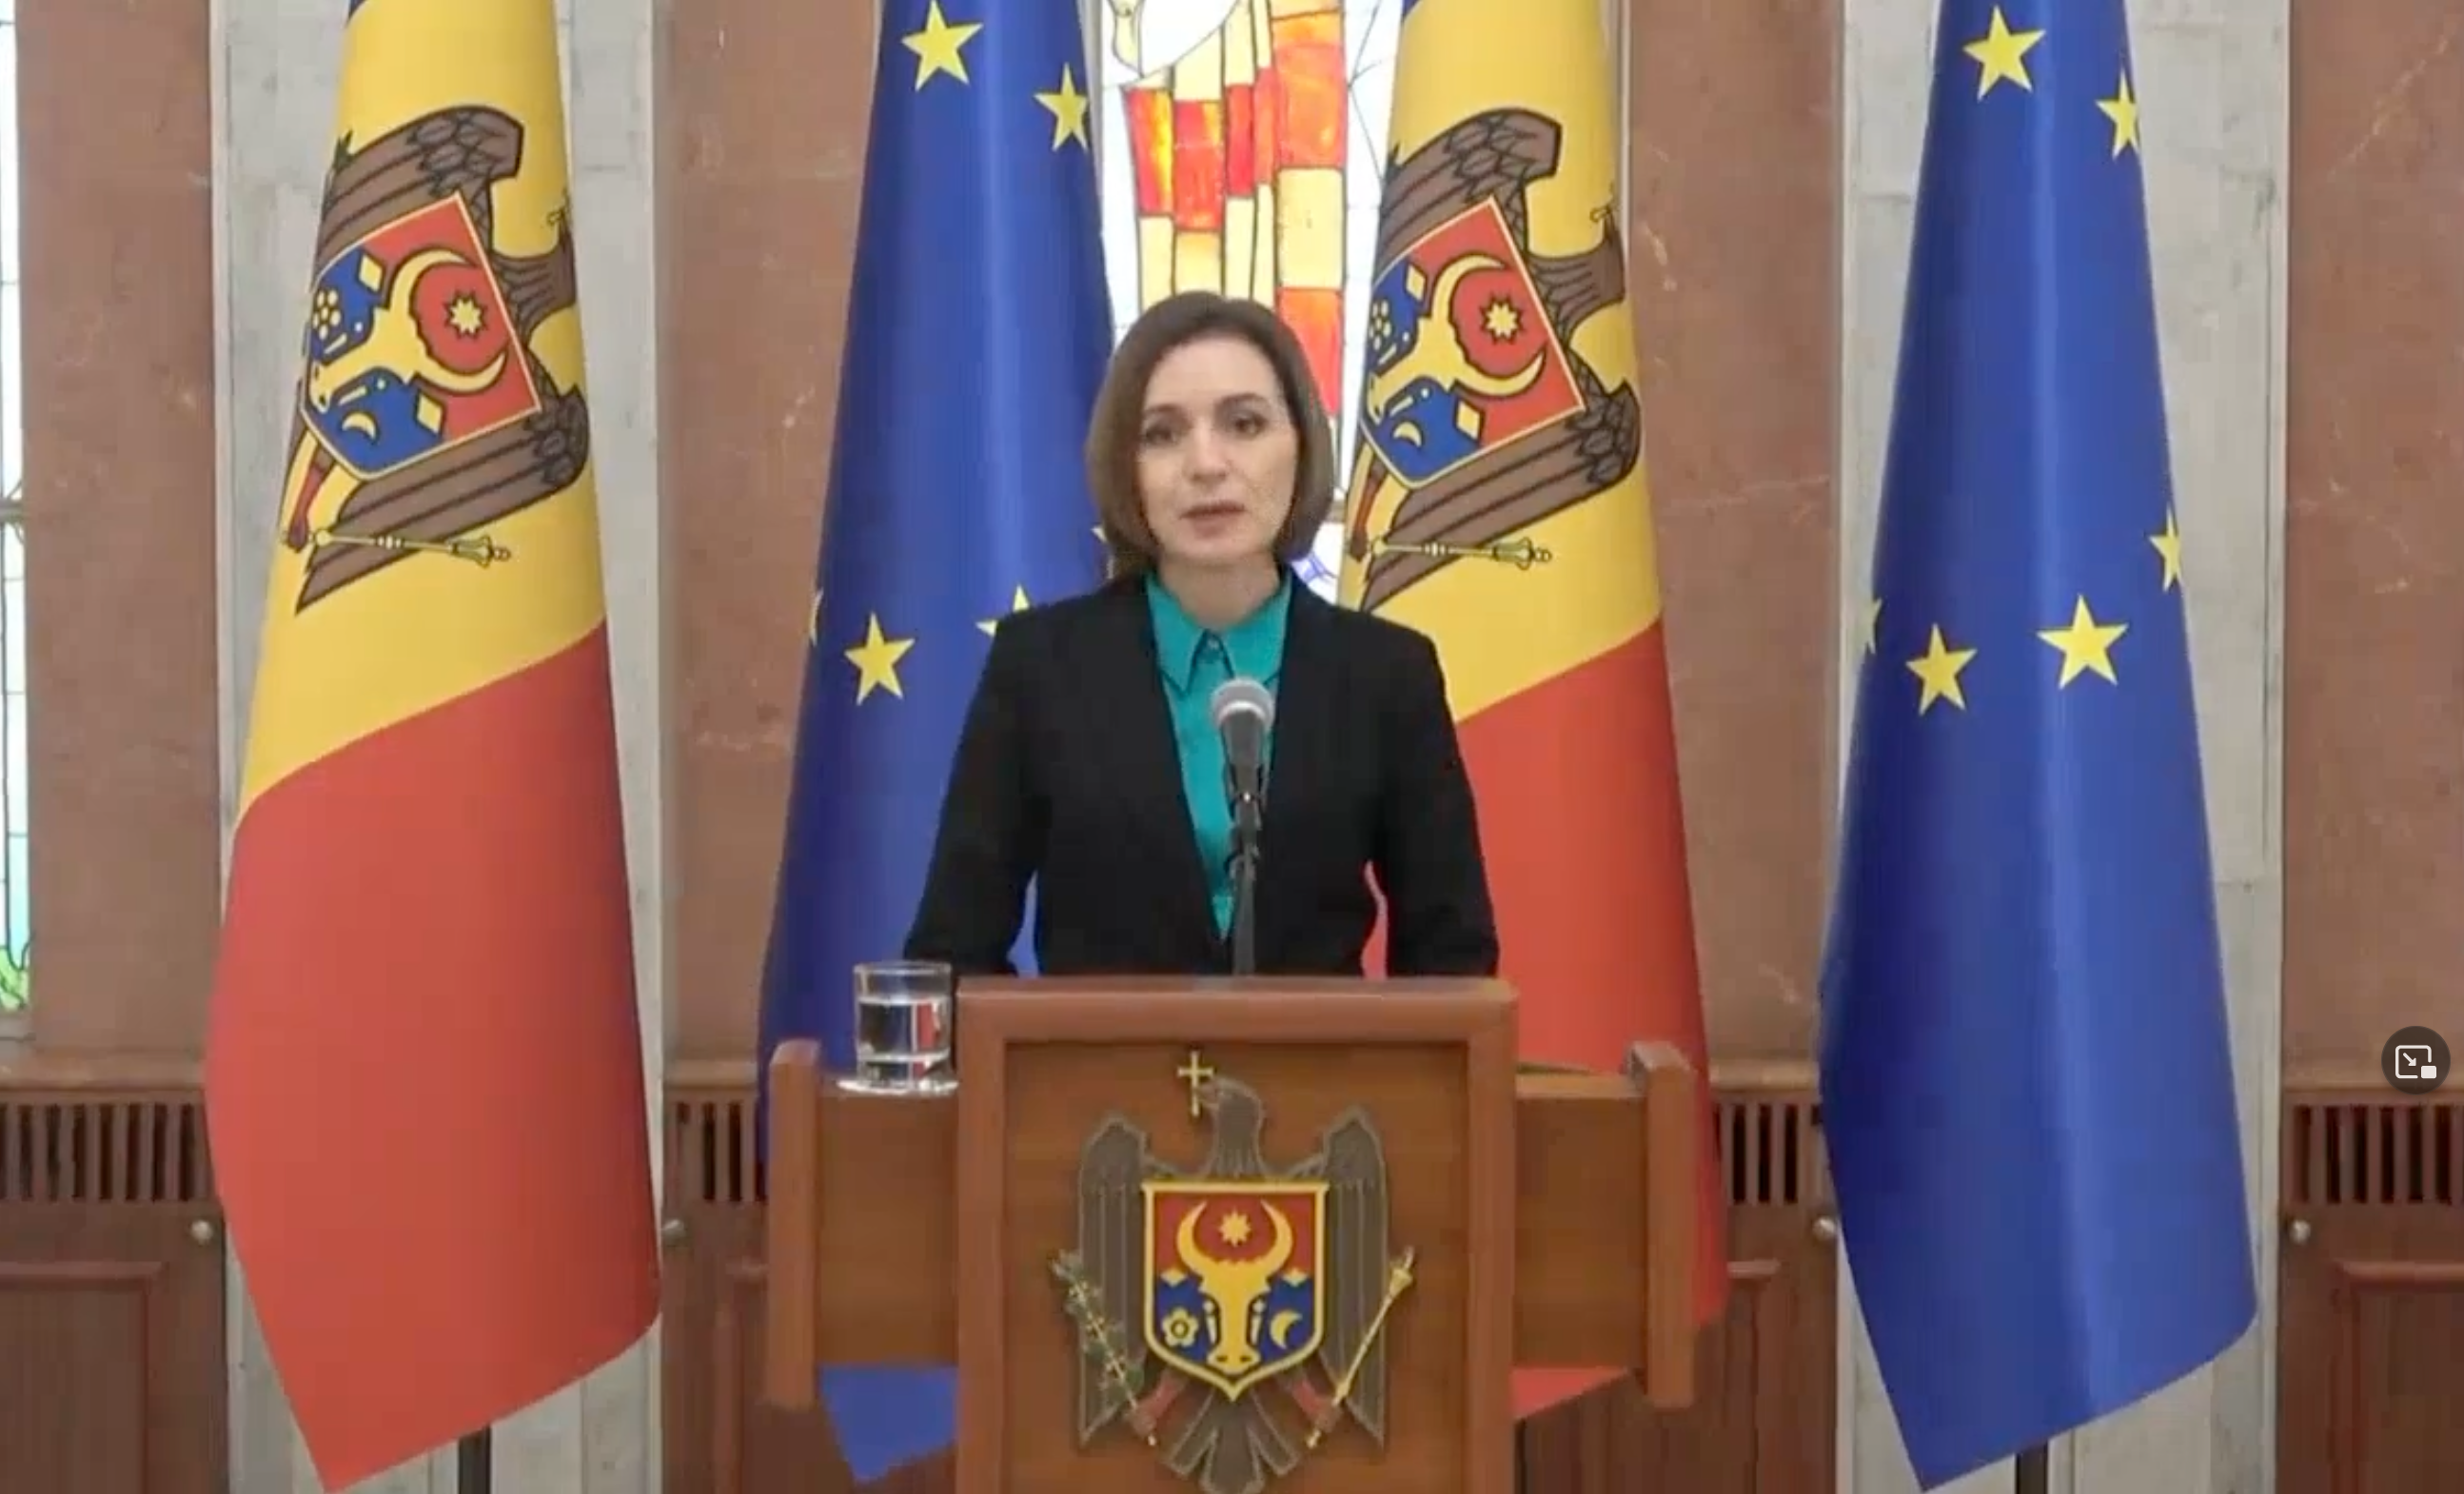 Maia Sandu, President of the Republic of Moldova